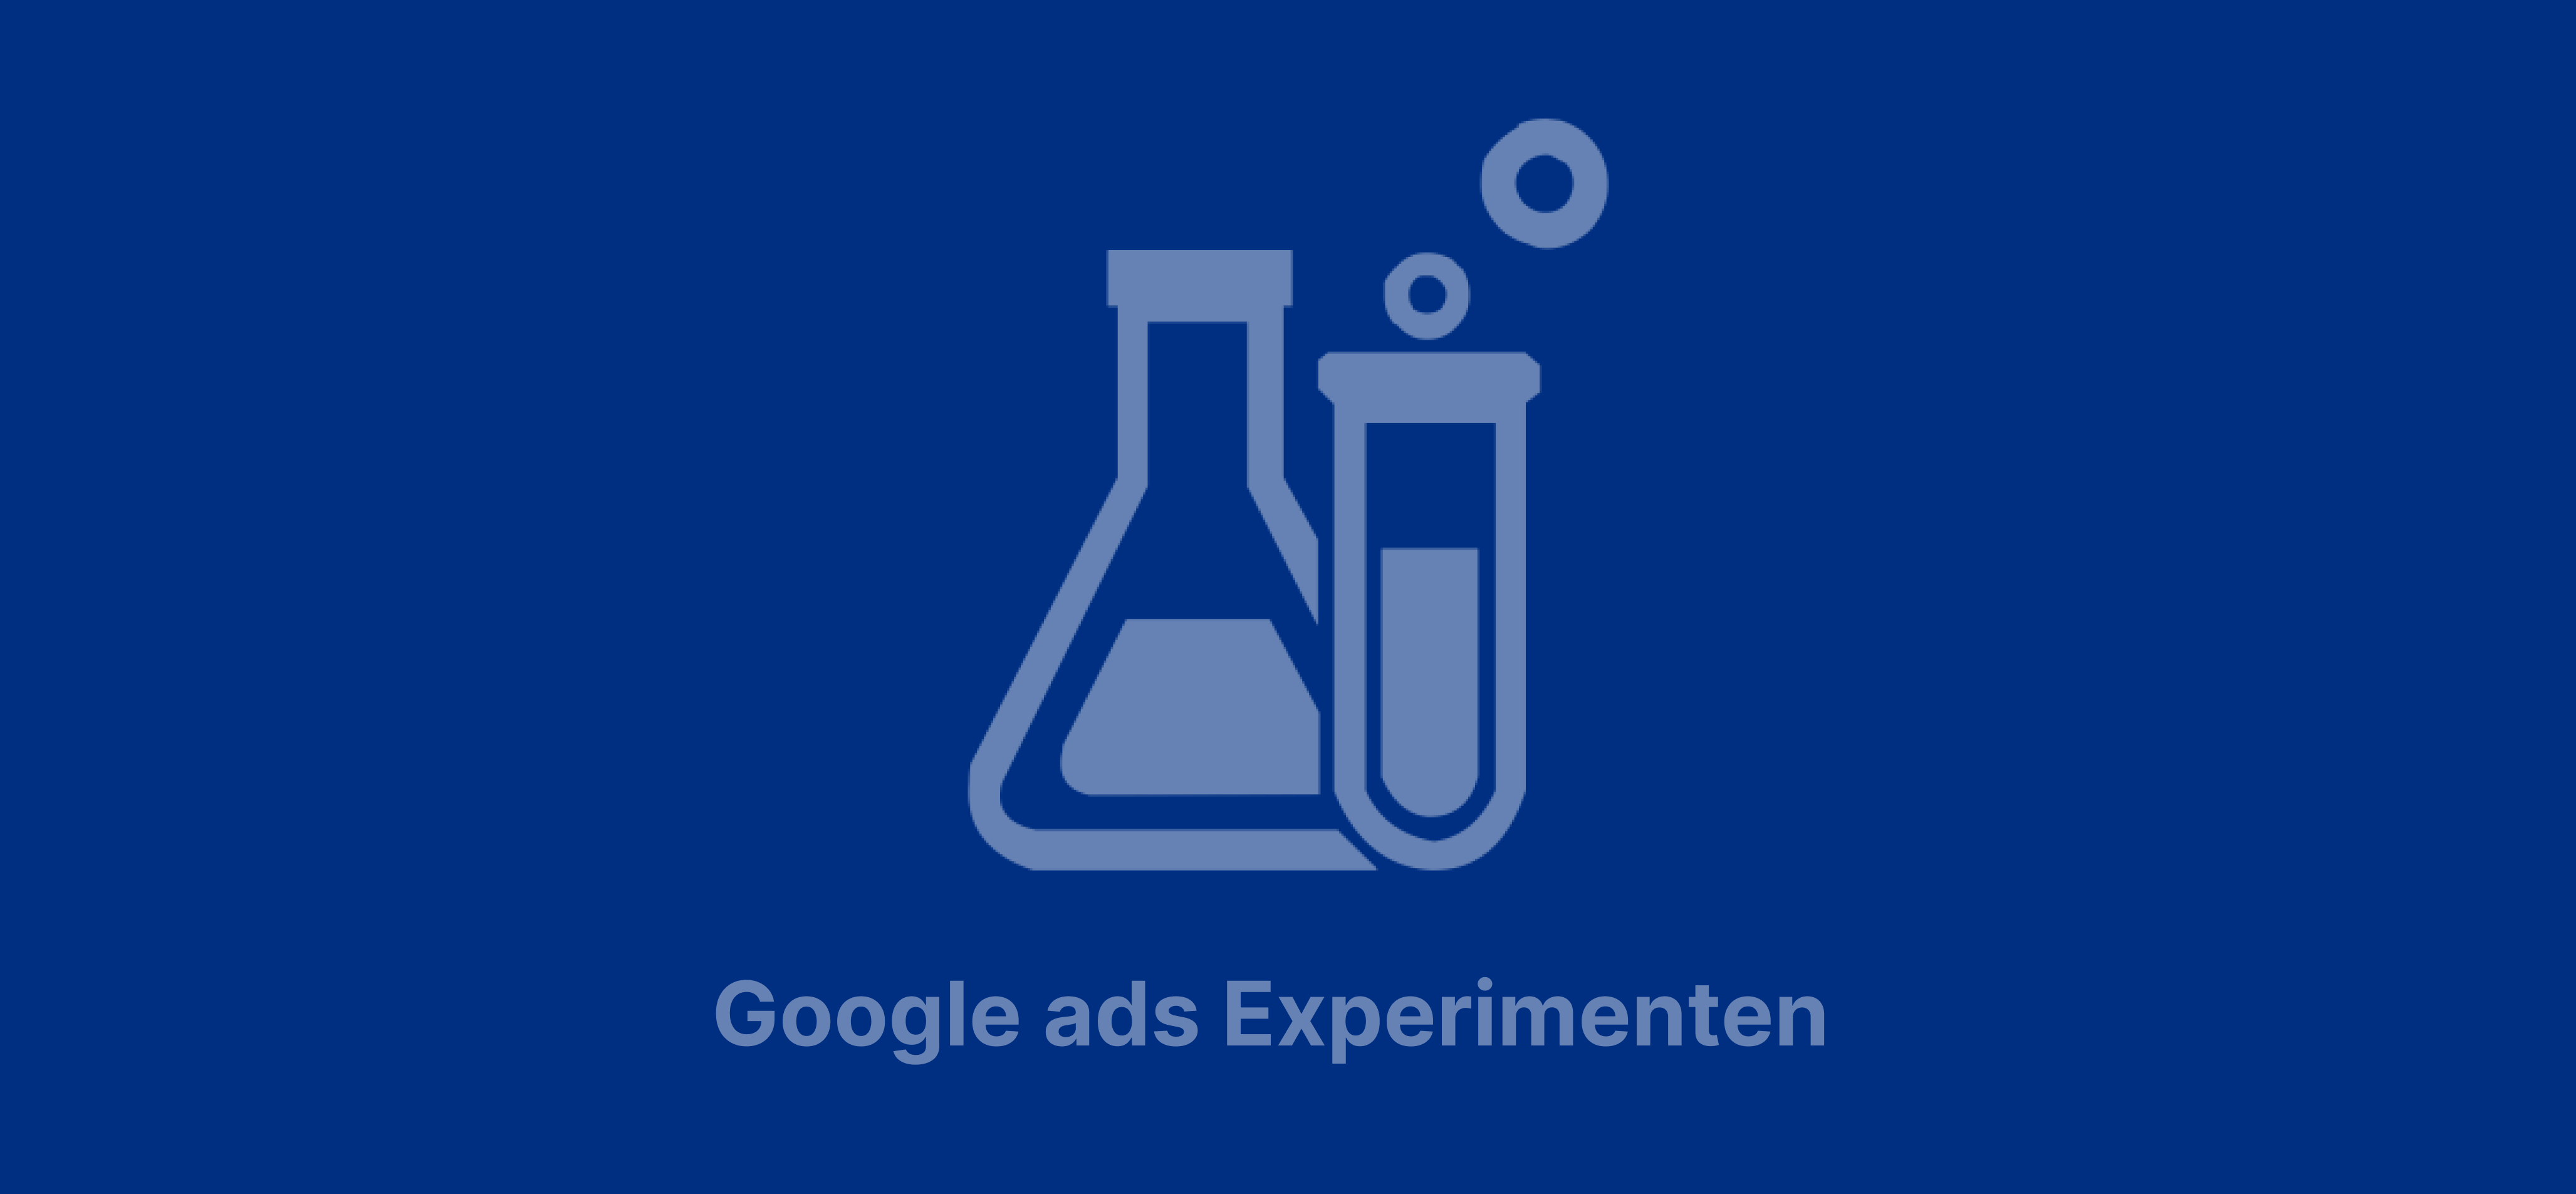 Google ads experiments